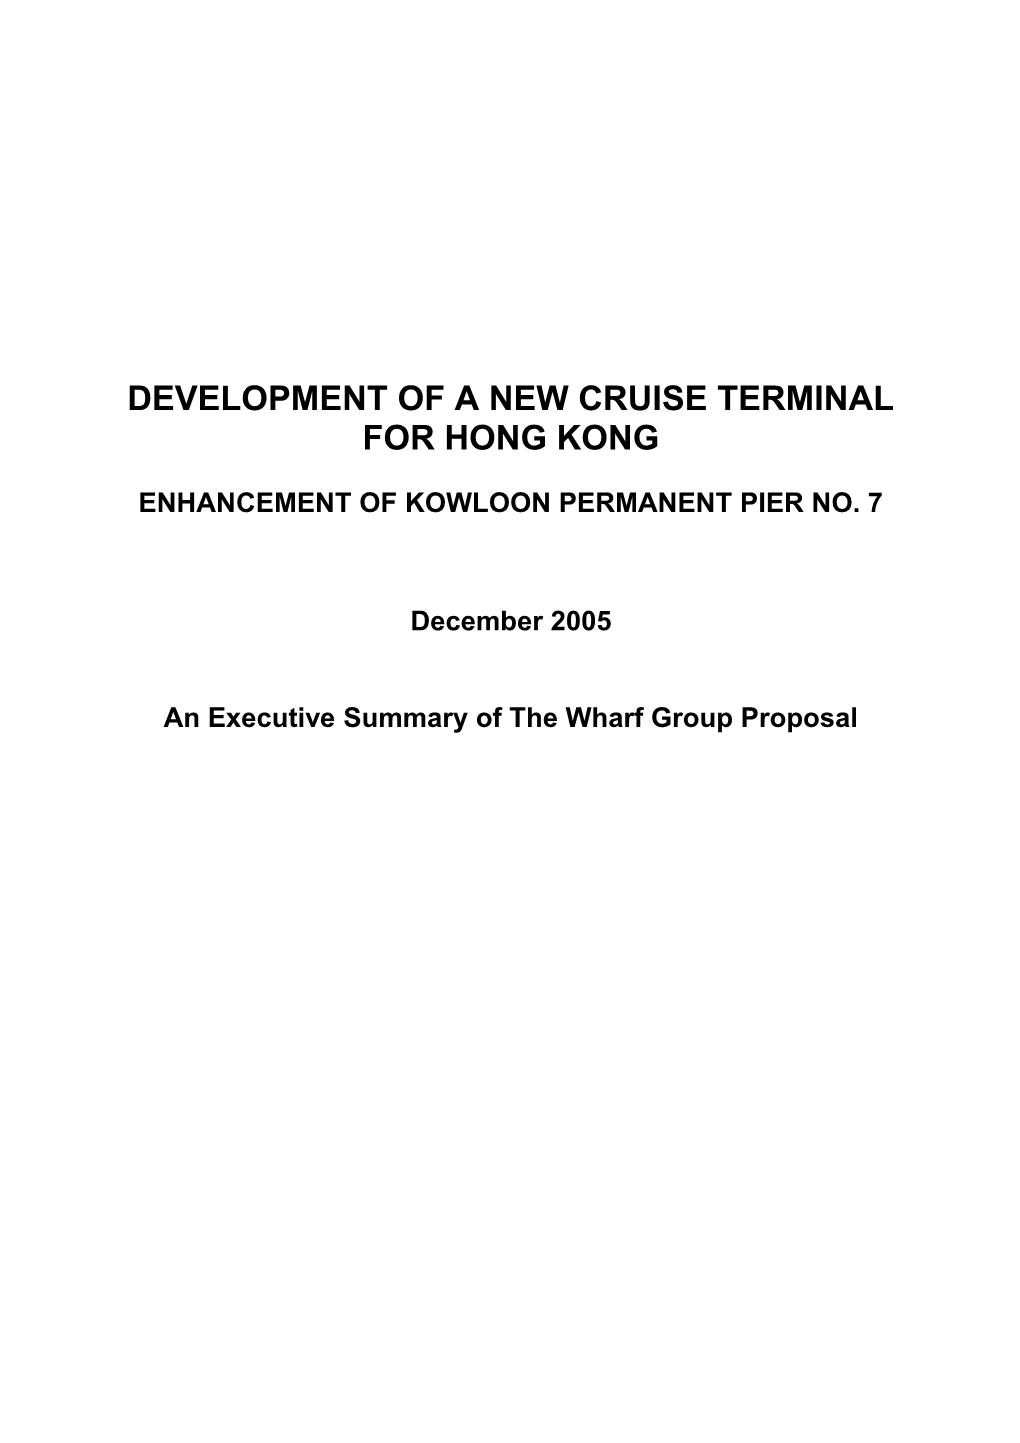 Development of a New Cruise Terminal for Hong Kong